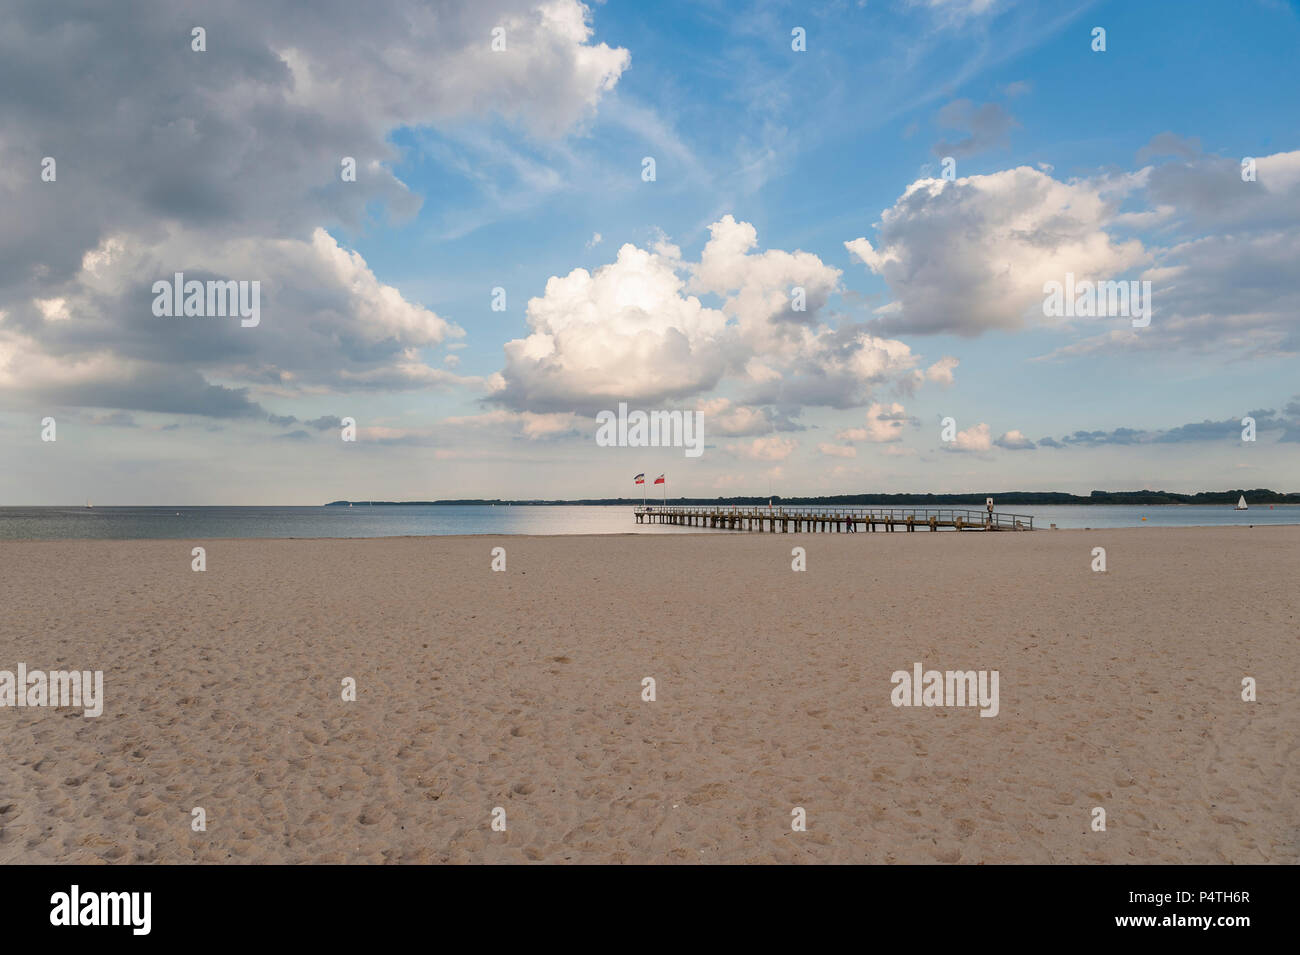 Empty sandy beach and pier, cloudy sky, Travemünde, Baltic Sea, Schleswig-Holstein, Germany Stock Photo